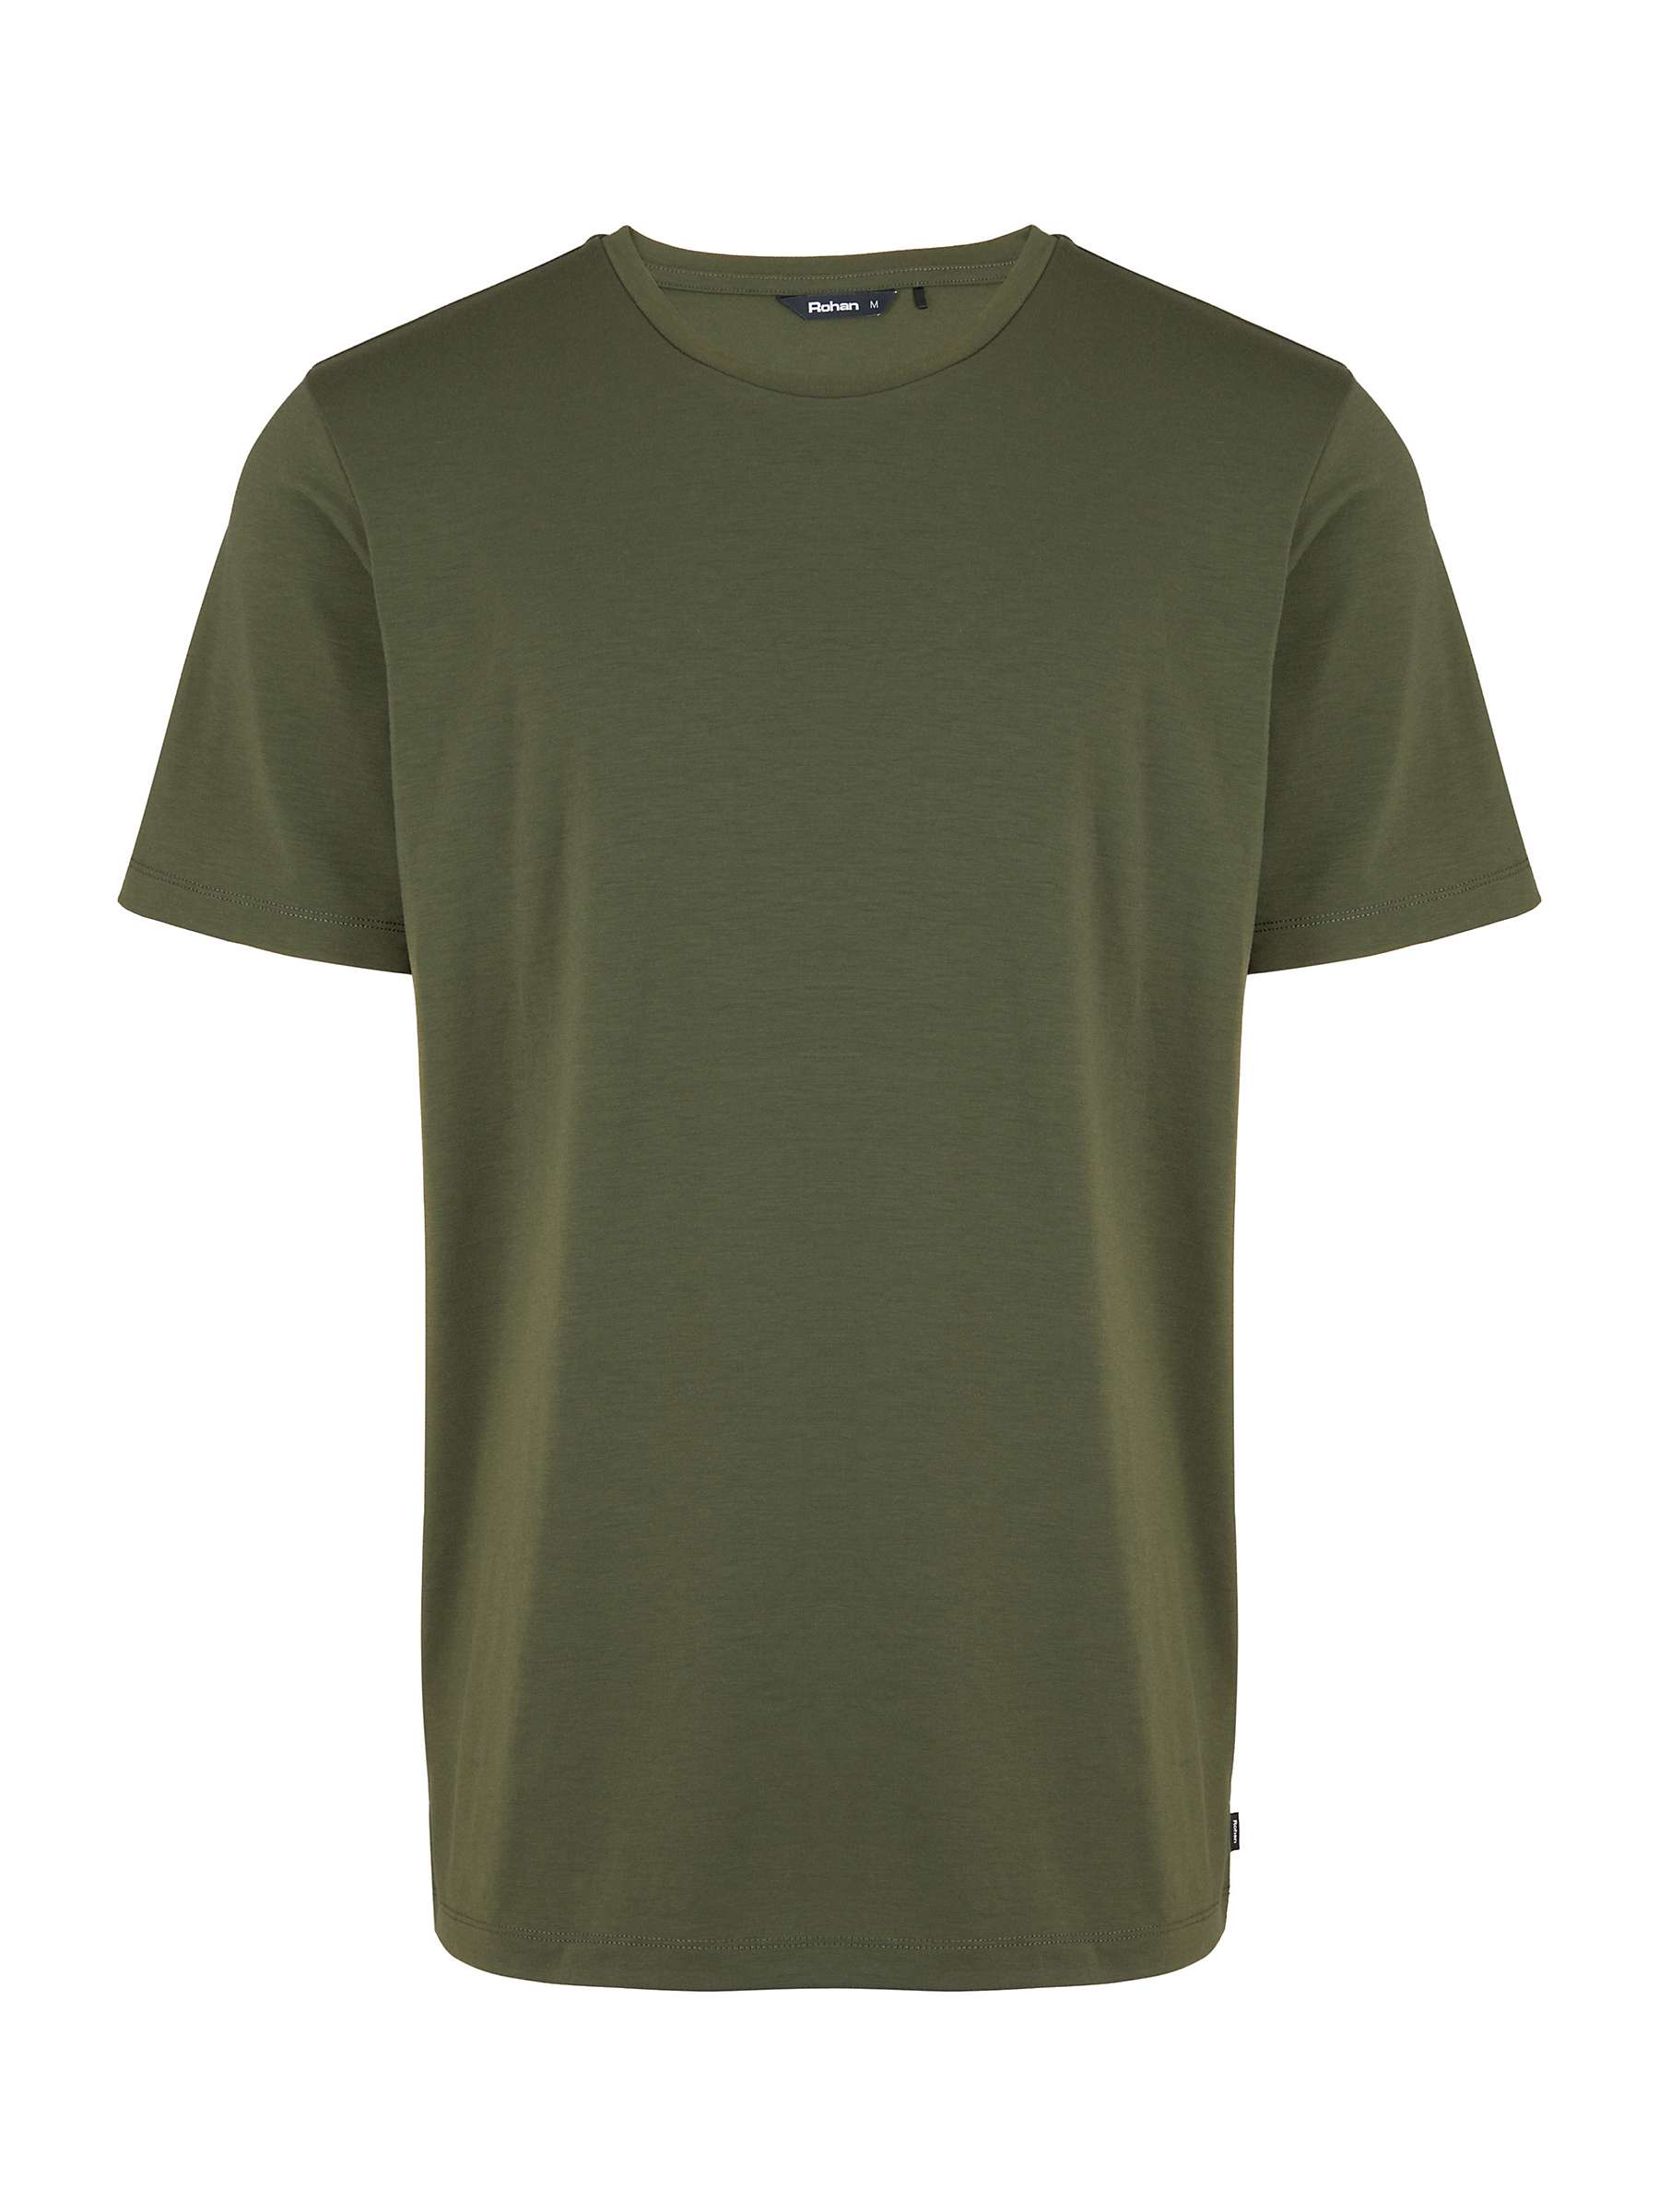 Rohan Global Long Sleeve T-Shirt, Conifer Green at John Lewis & Partners